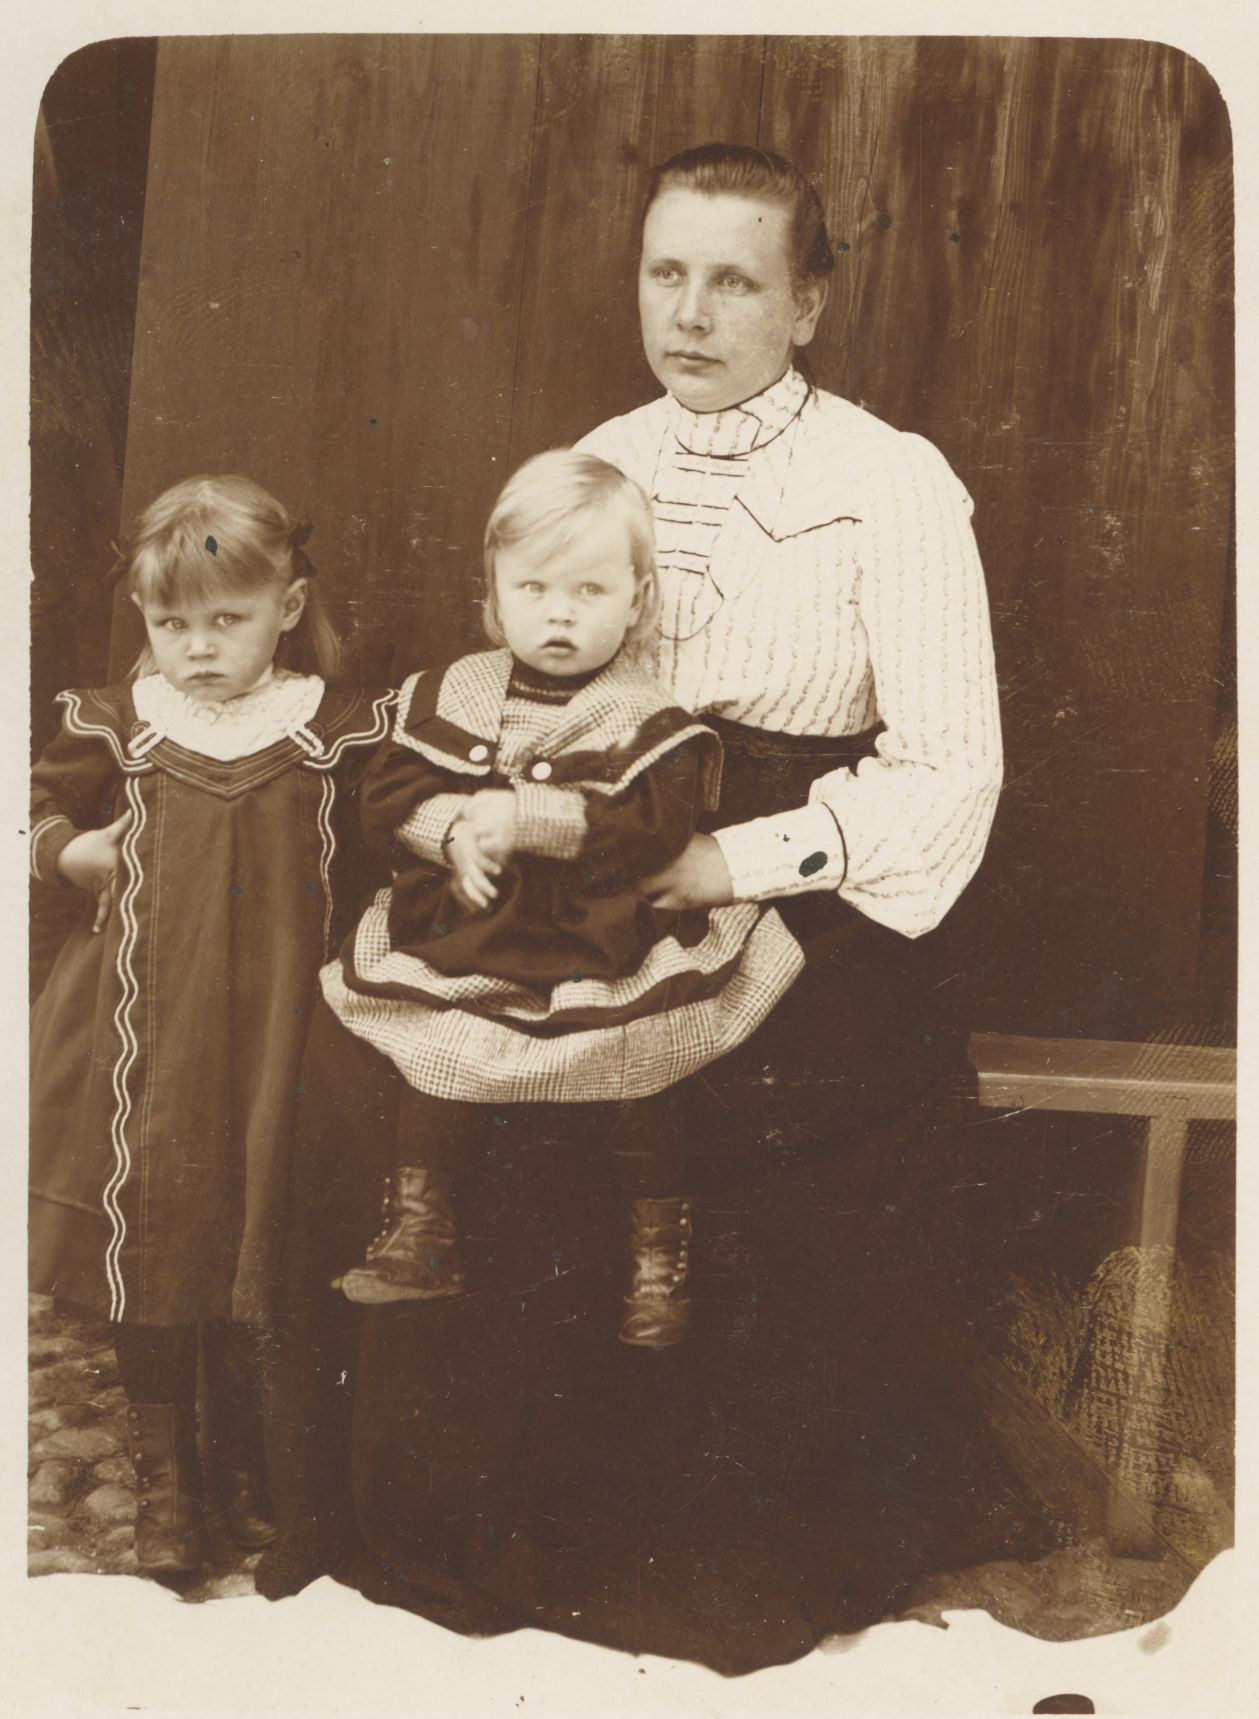 Mihkel Kampmaa's wife's daughters Karin and Mari Volmar in 1907?